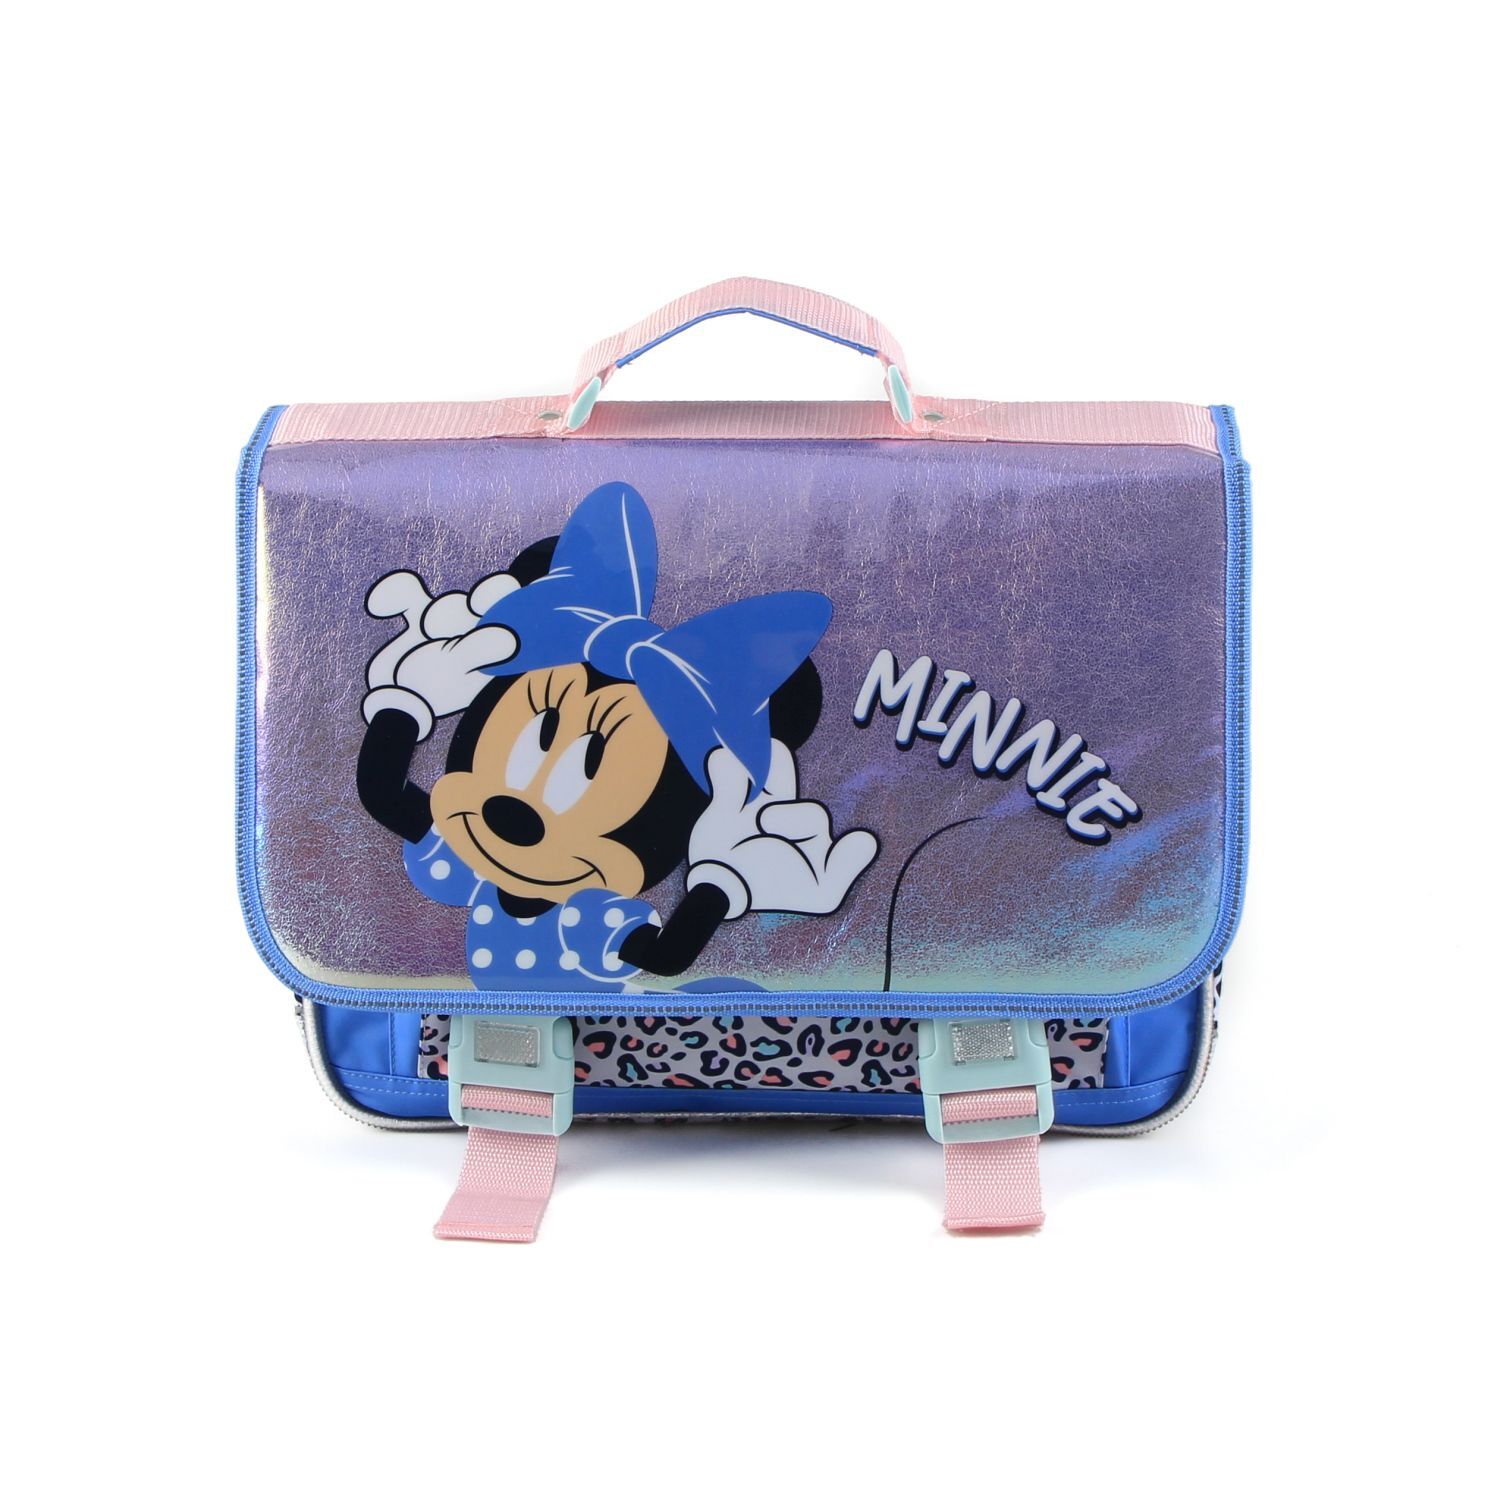 Рюкзак Disney Minnie Mouse Minnie Maus Leopard Schul Blaue Schleife 41cm, синий рюкзак disney minnie holding flowers mini